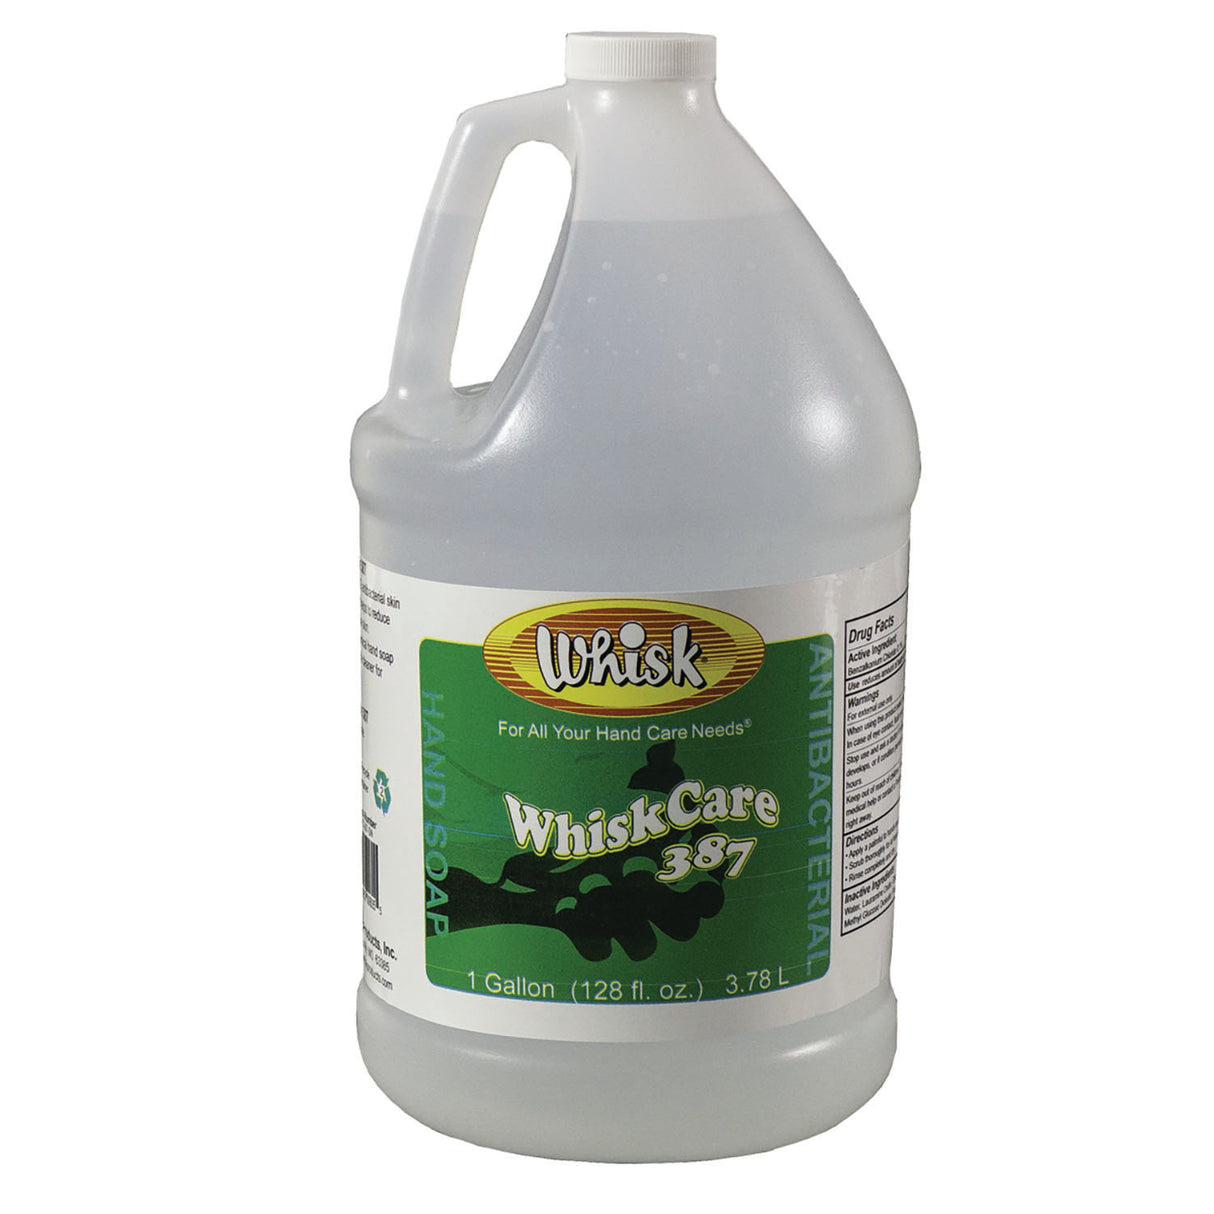 WhiskCare Antibacterial Foam Soap, 1 Gallon Bottle, 4/Case